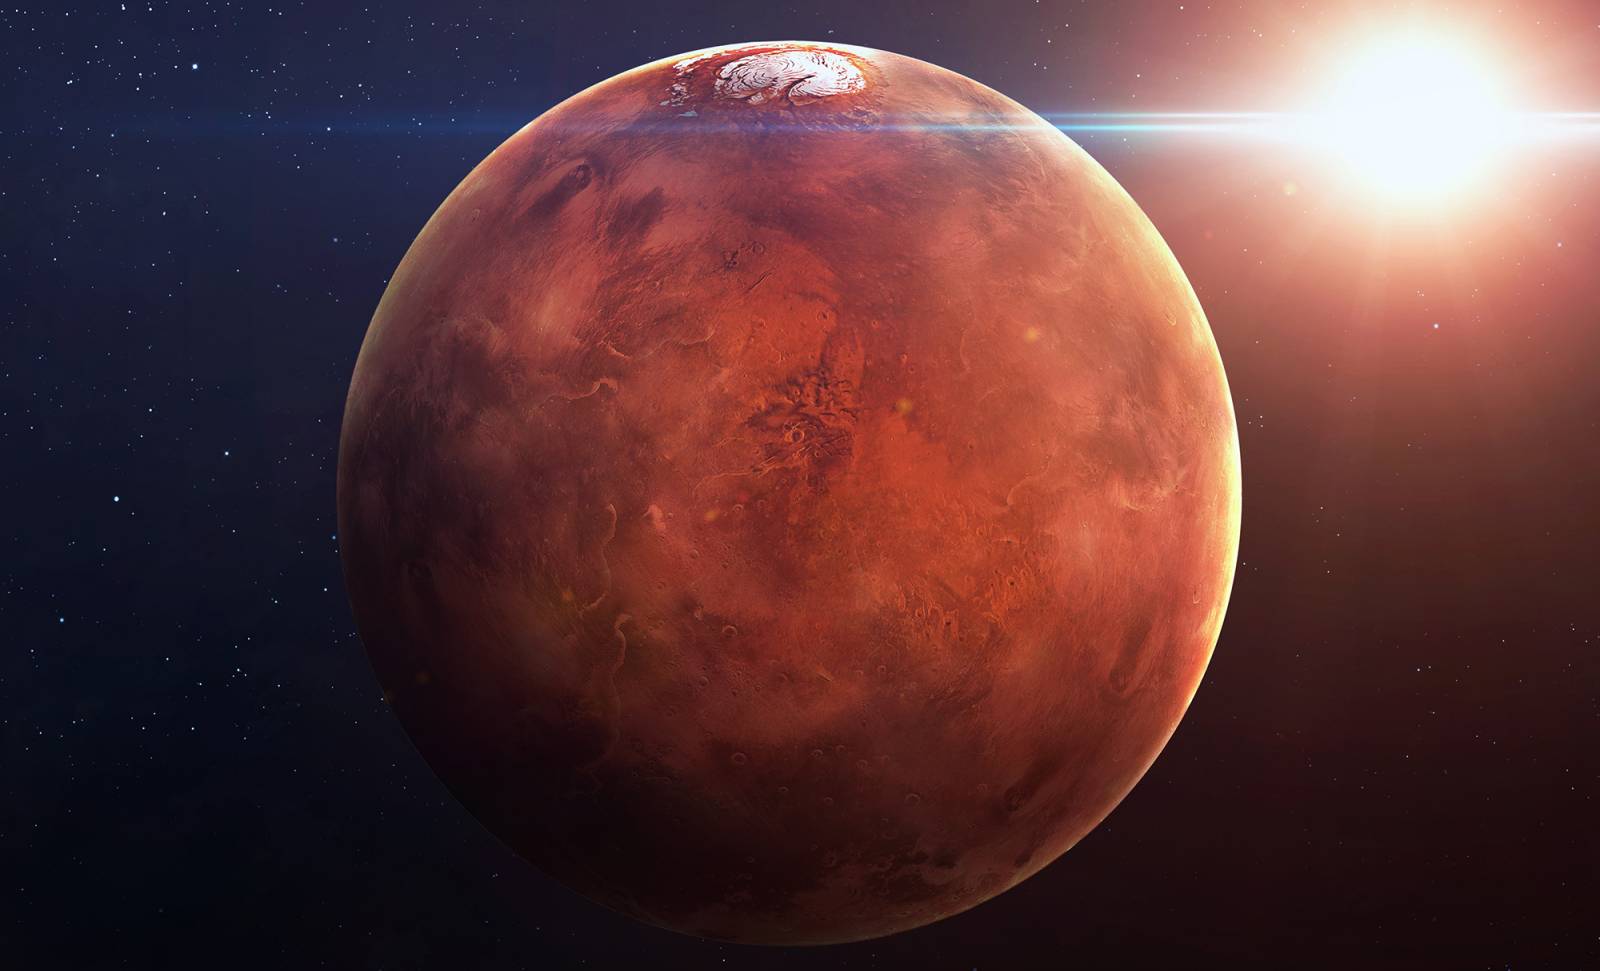 The AMAZING image Planet Mars published by NASA